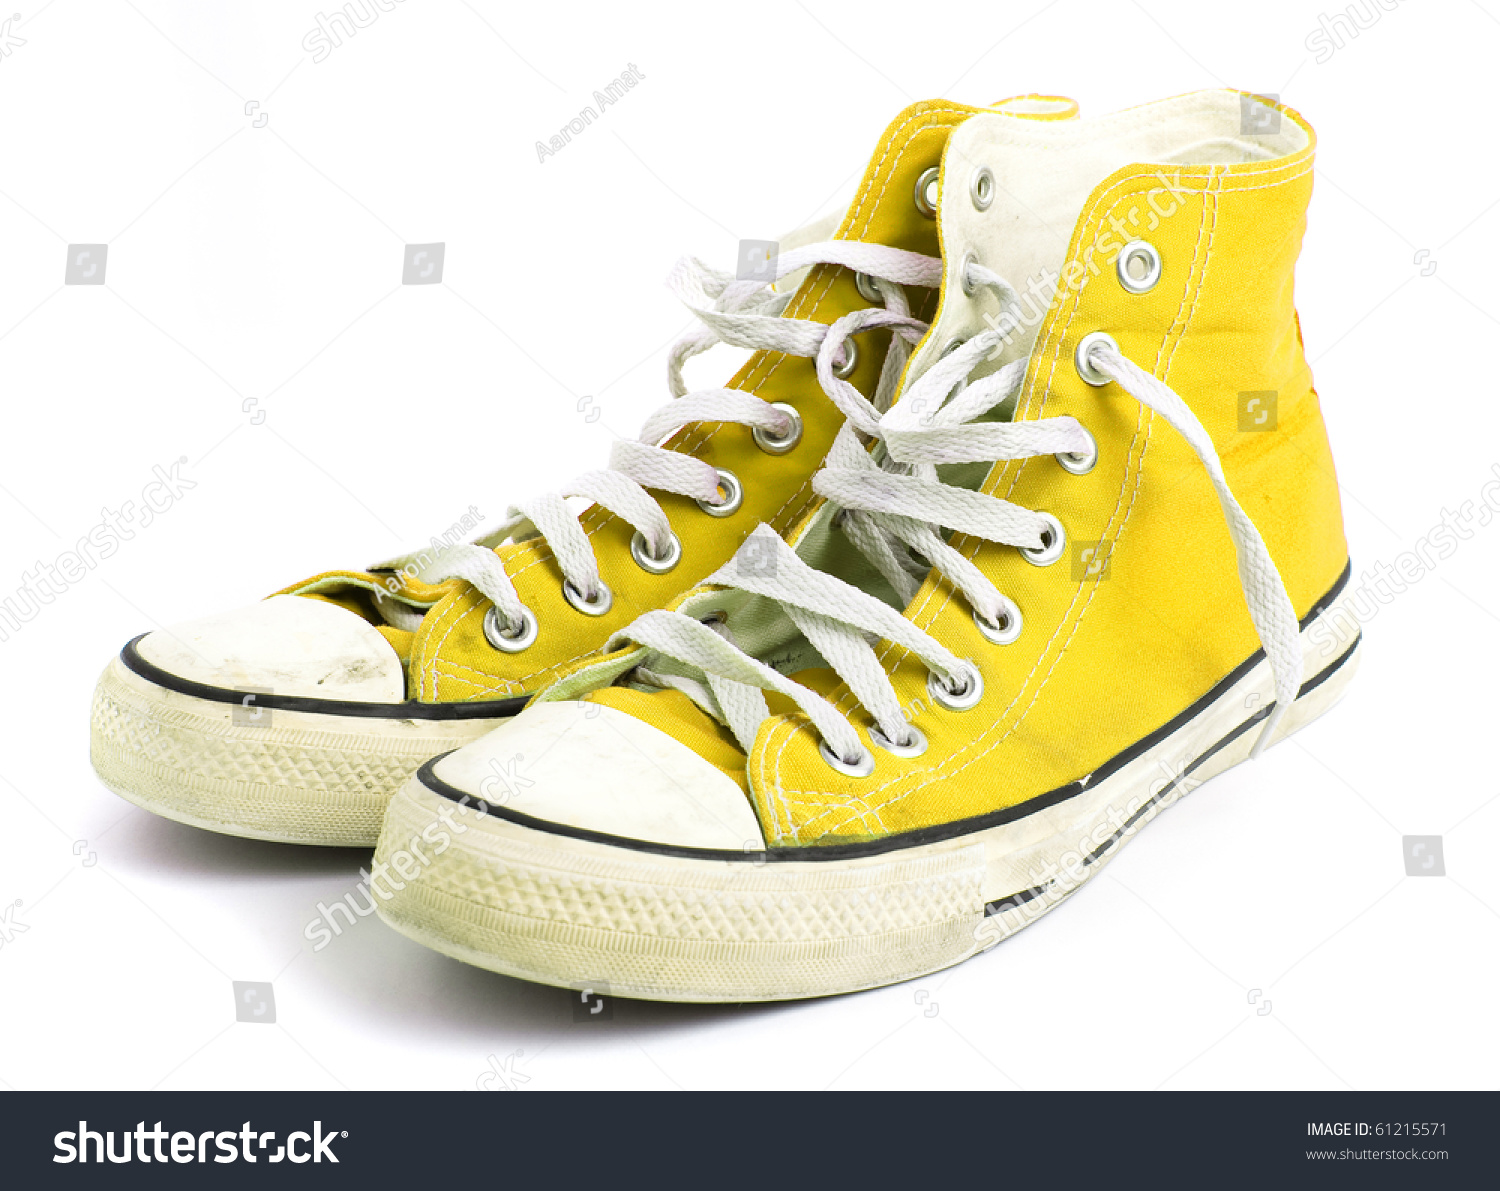 Sneakers Stock Photo 61215571 : Shutterstock